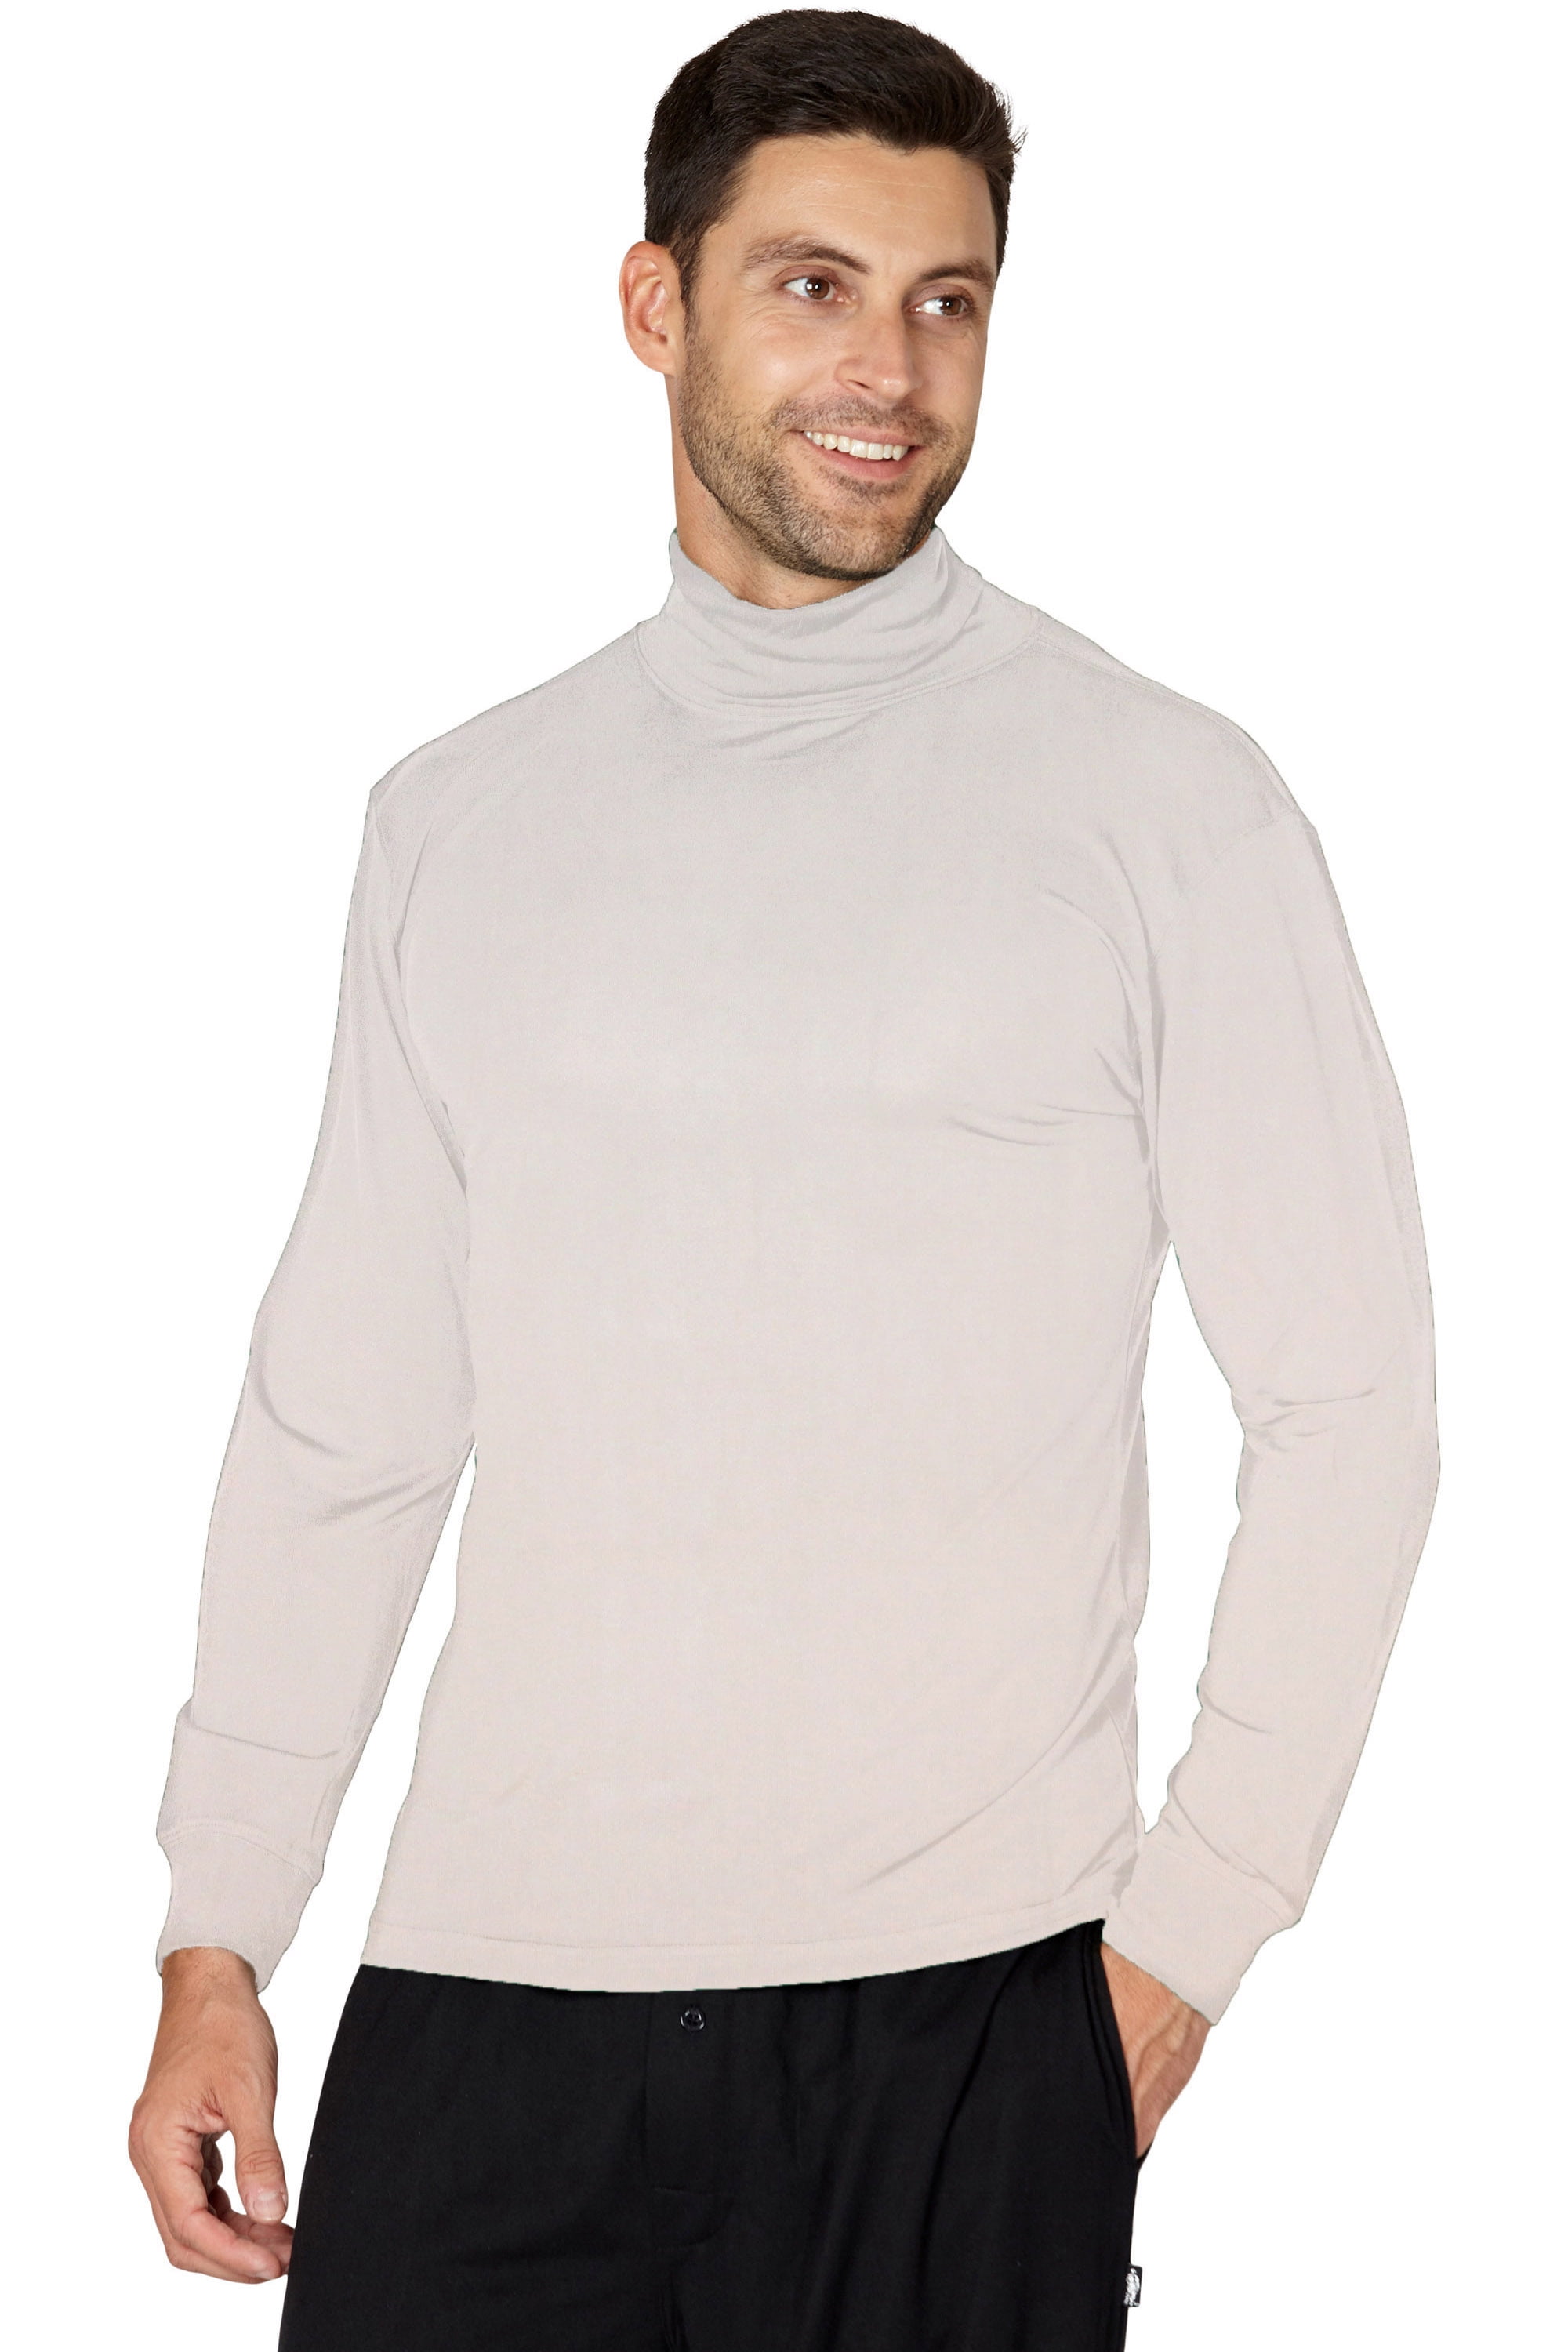 Intimo - Men's Silk Unisex Fold Over Turtleneck Long Sleeve Shirt ...